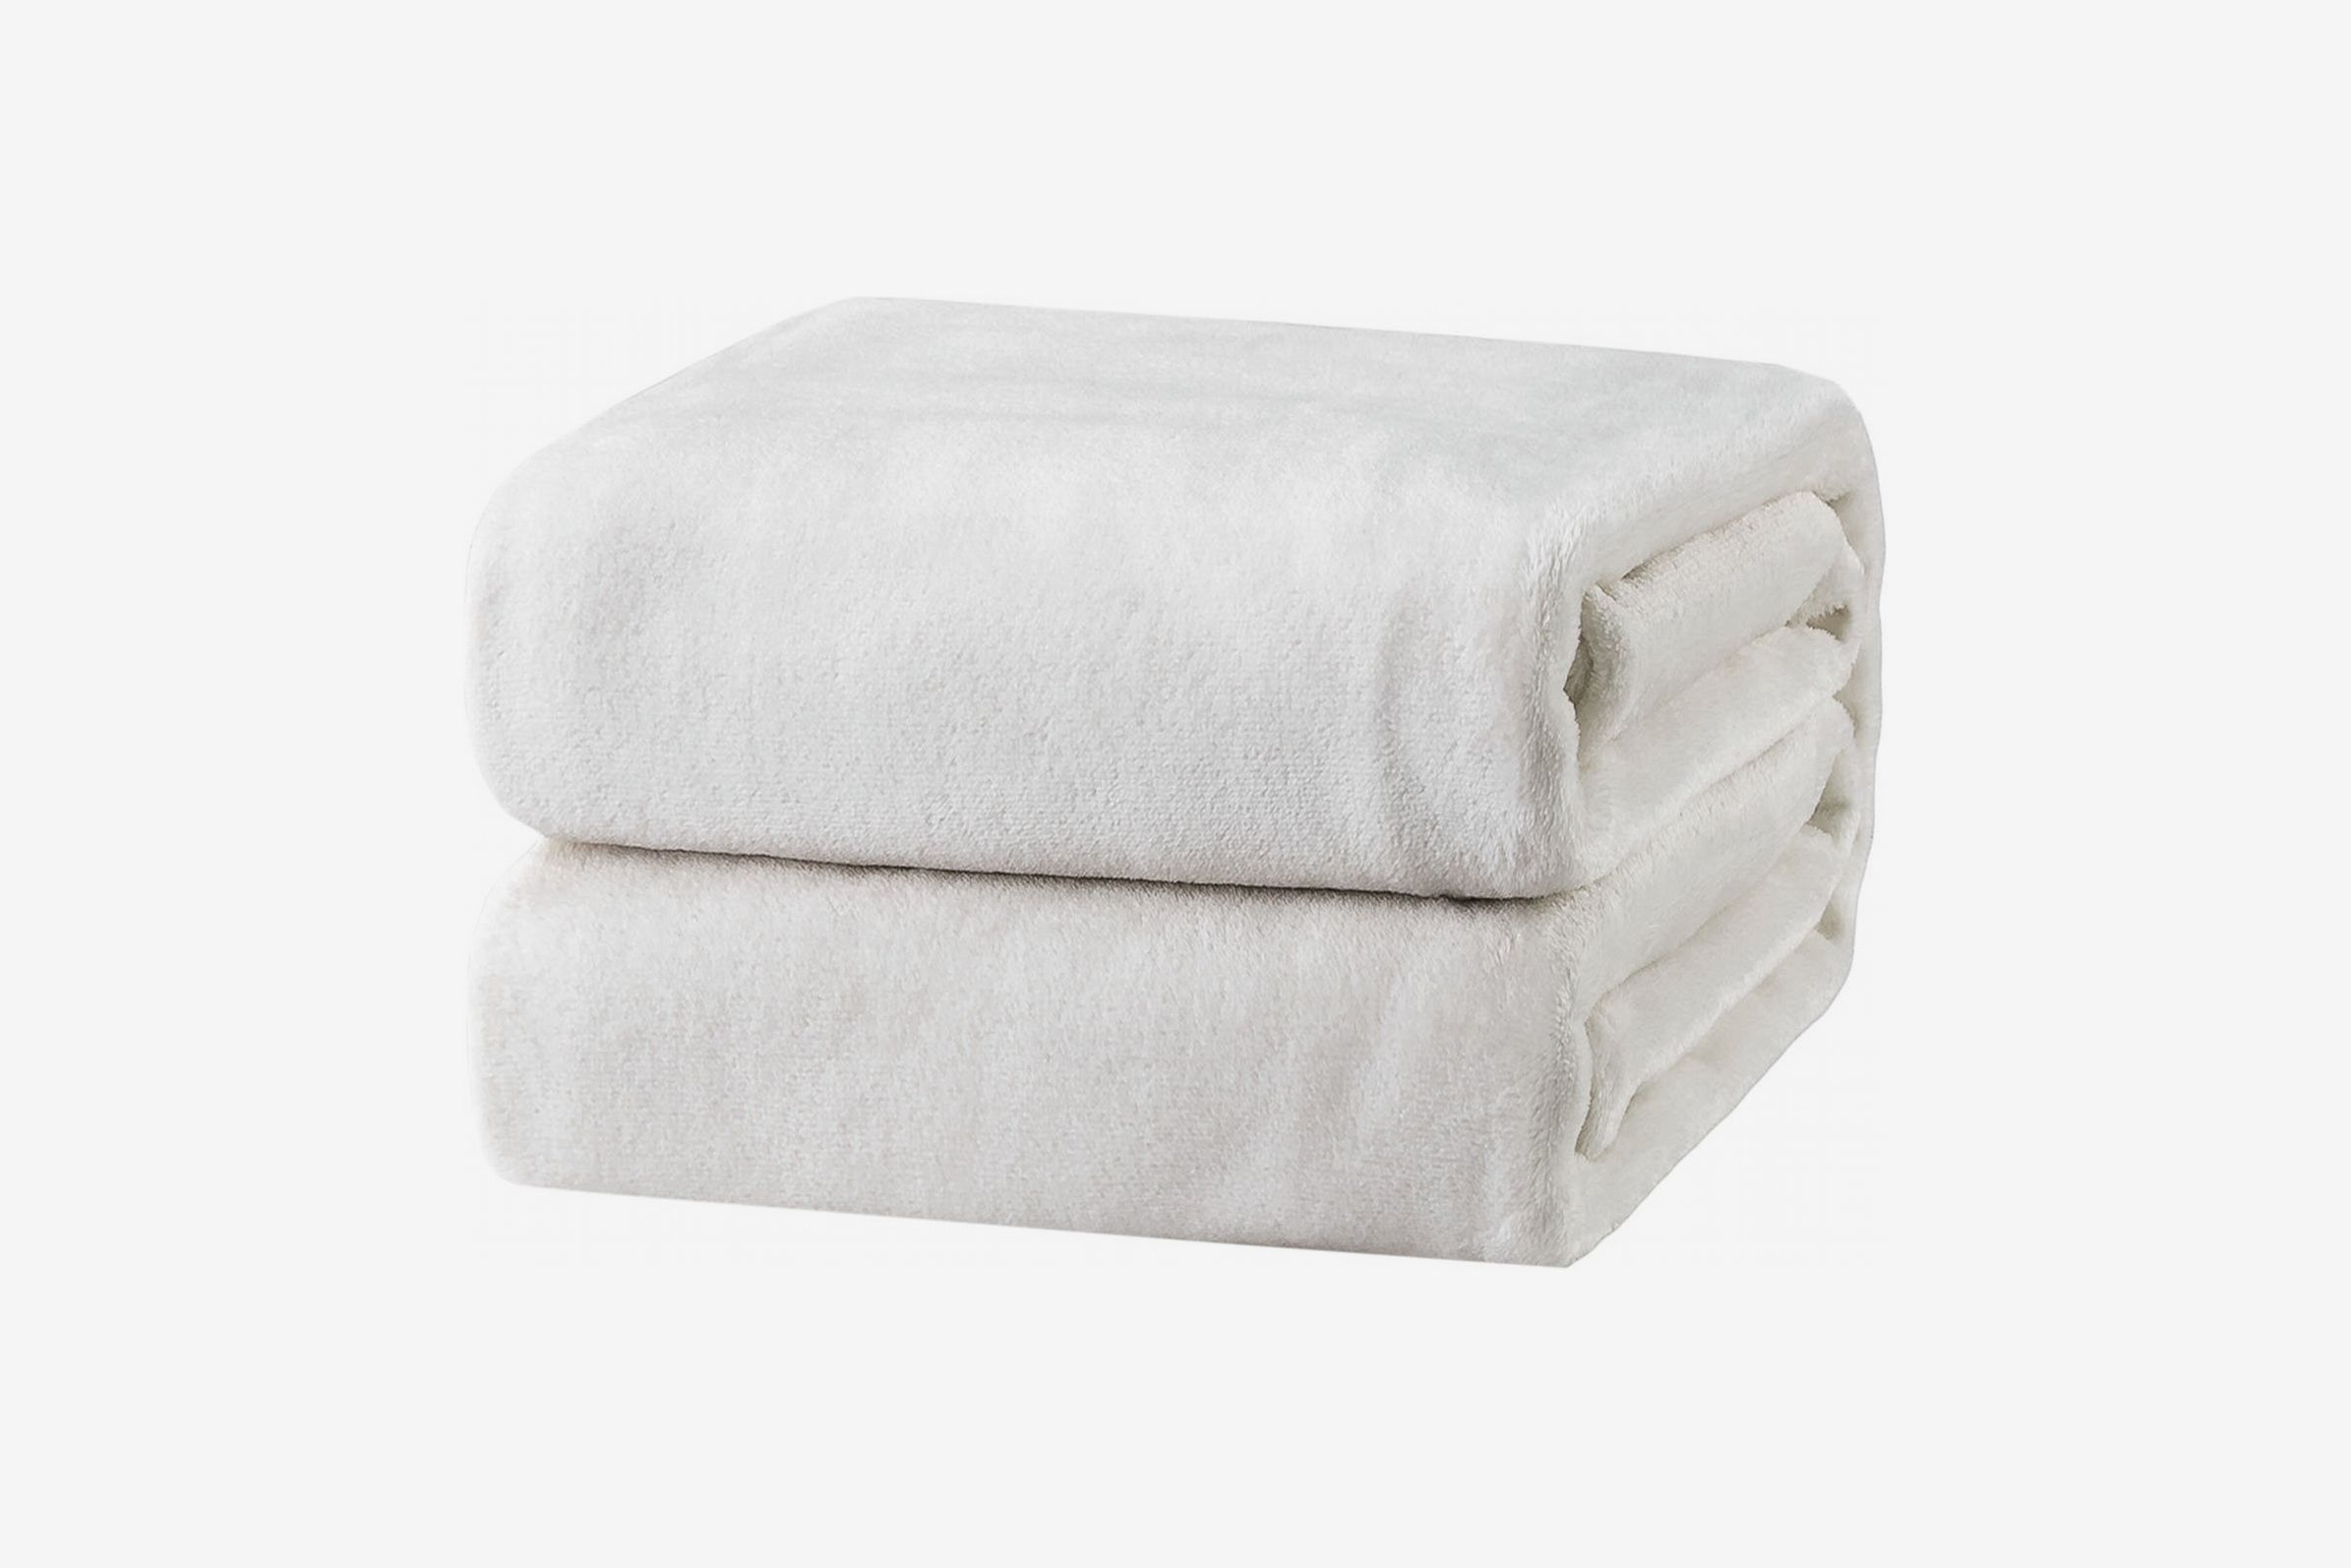 Bed Blanket Soft Warm Plush Throw Lightweight Cozy Car Blankets 3 Sizes 